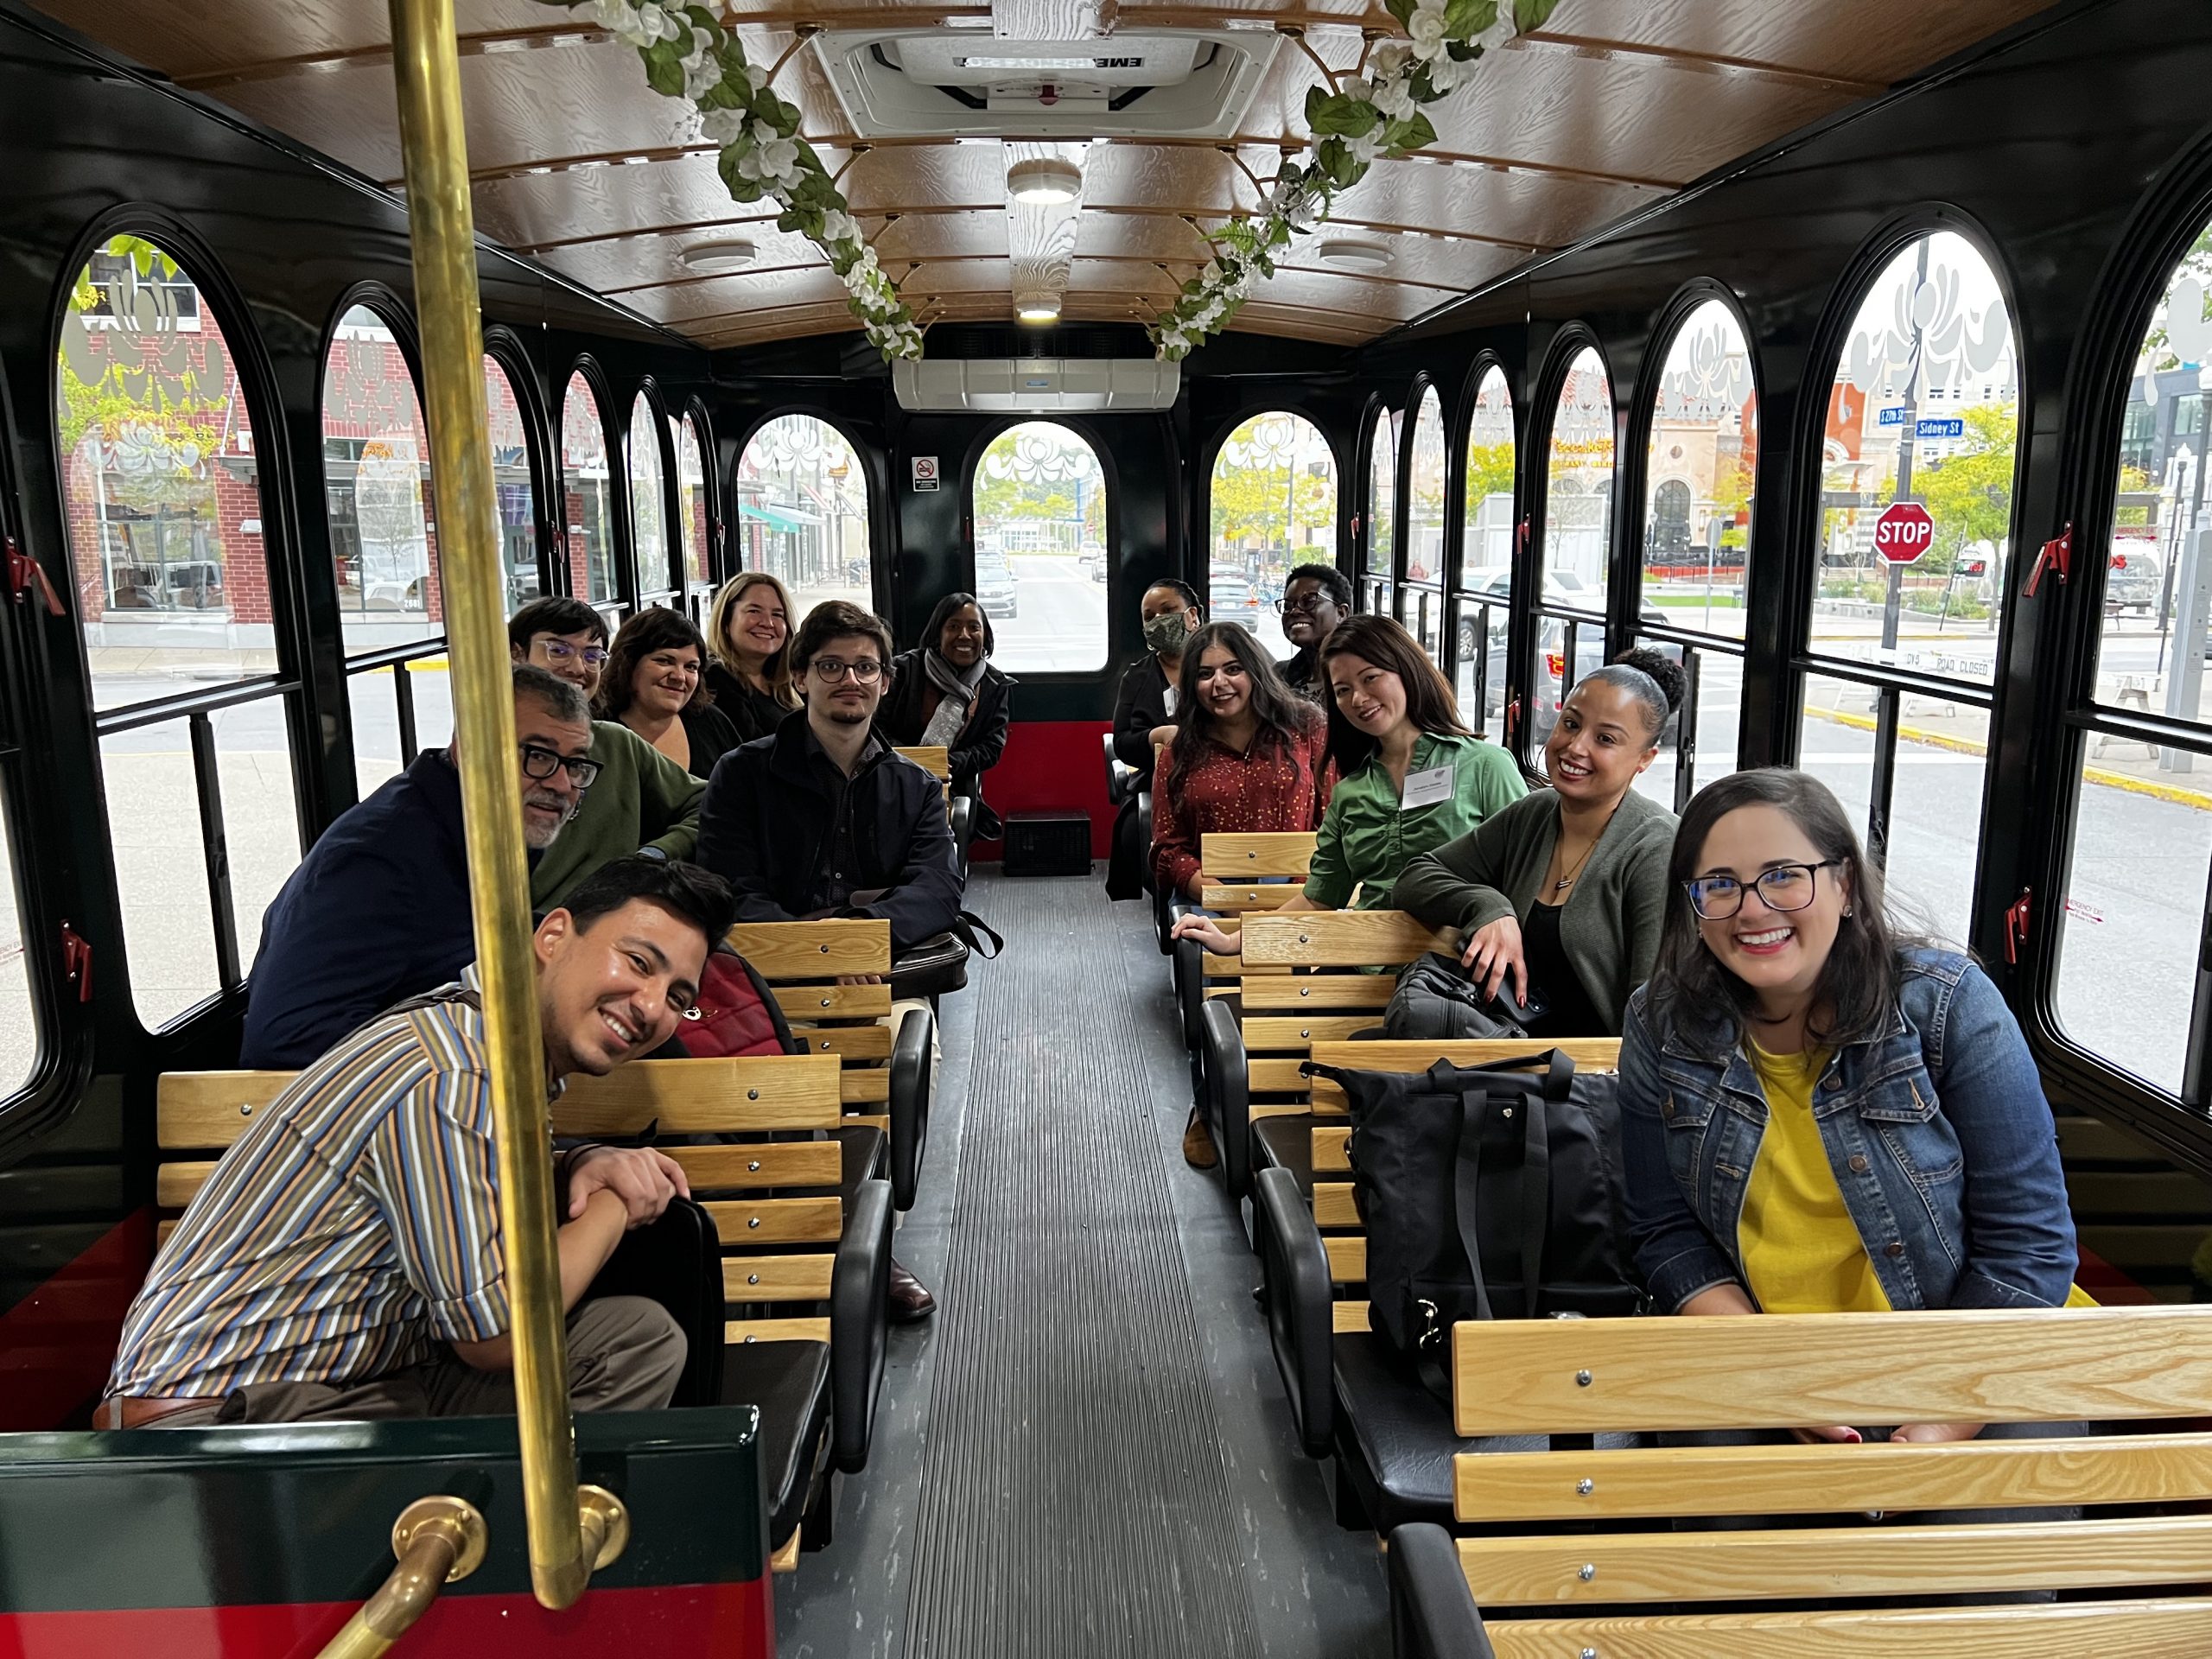 Fellows sitting together on a trolley.